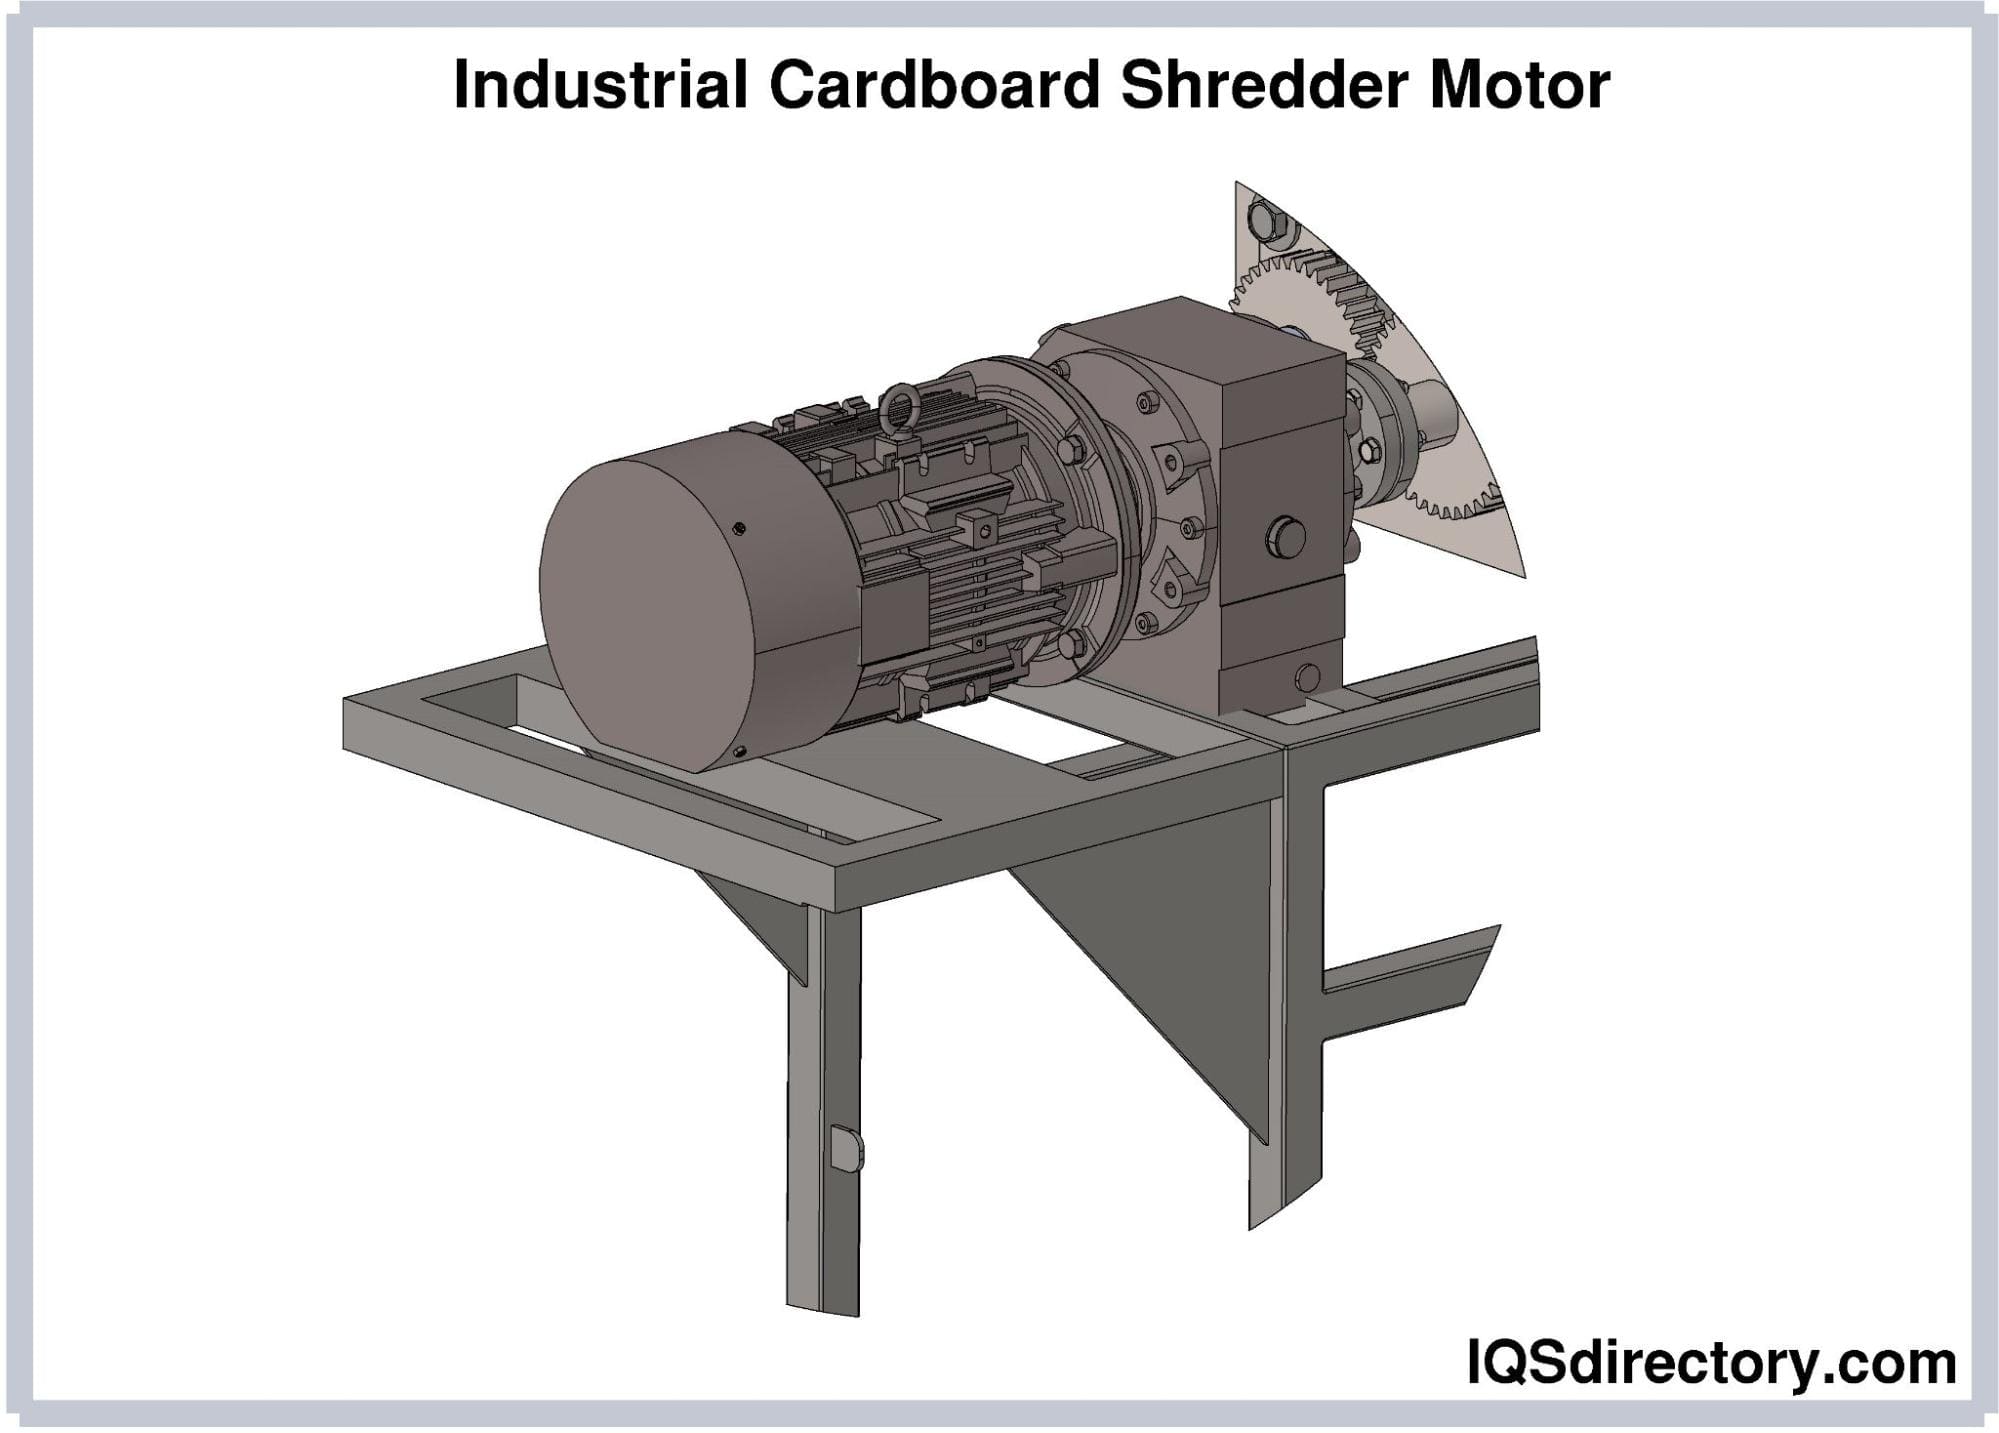 https://www.iqsdirectory.com/articles/shredder/cardboard-shredders/industrial-cardboard-shredder-motor.jpg